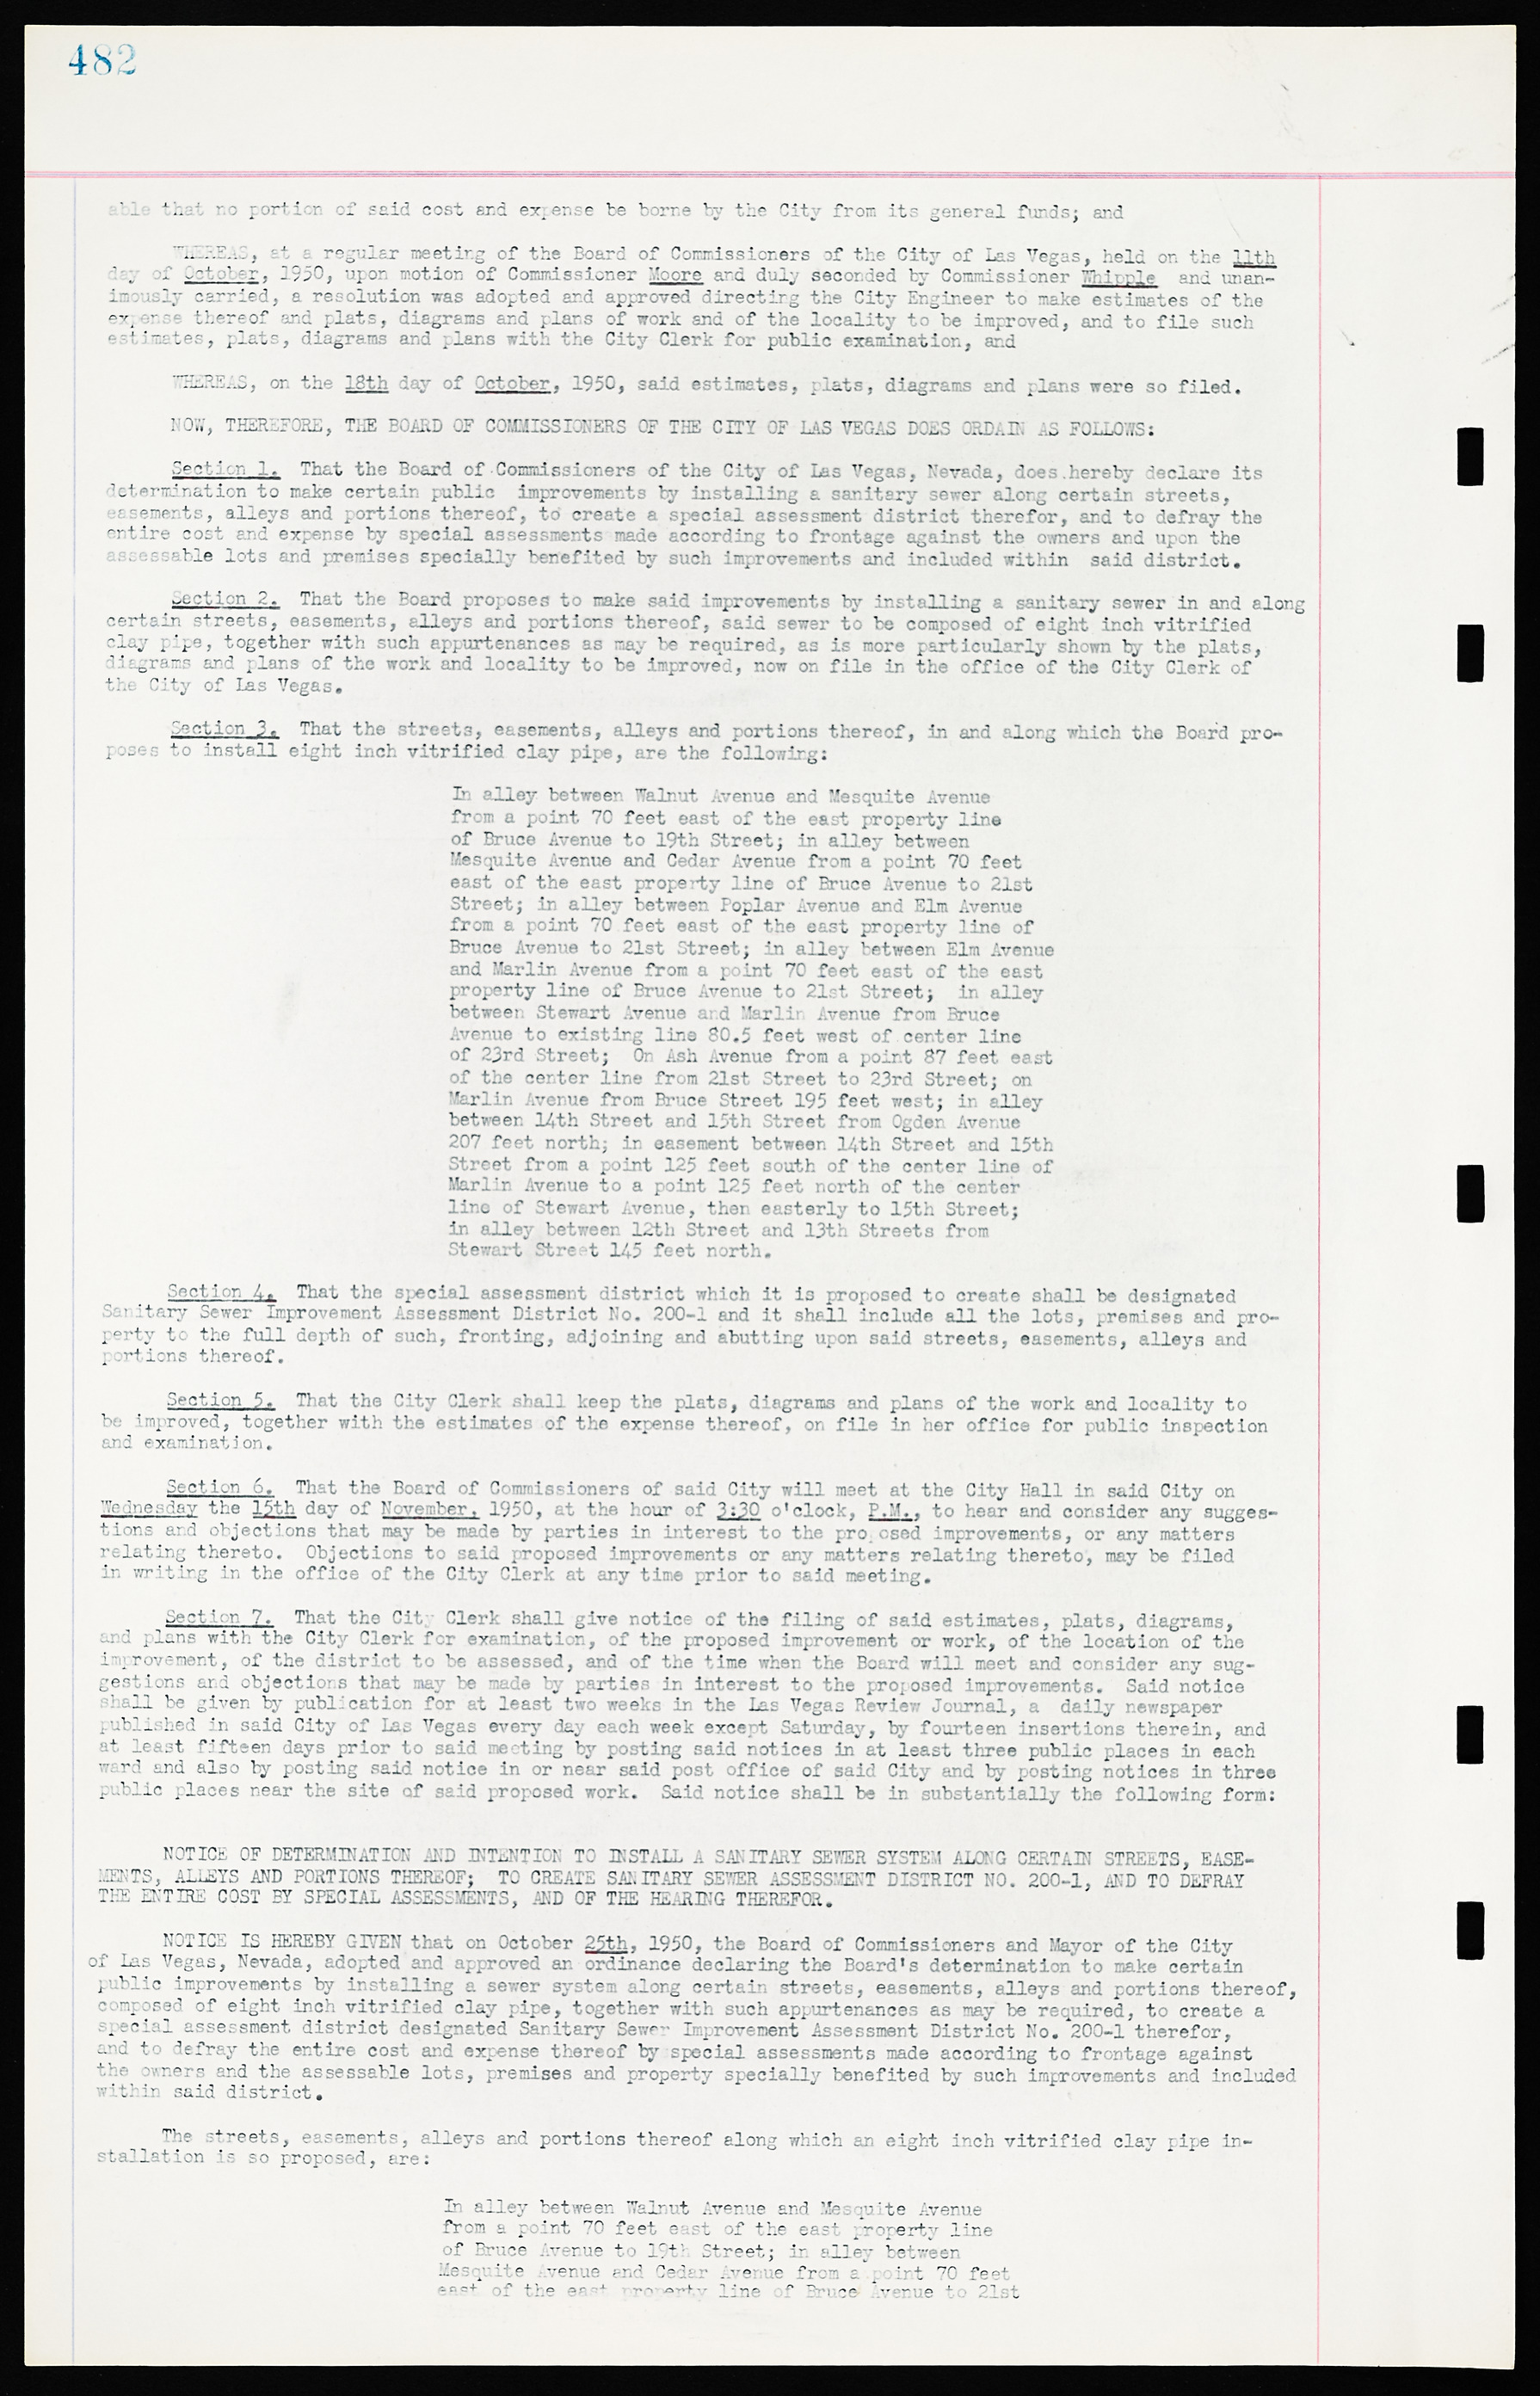 Las Vegas City Ordinances, March 31, 1933 to October 25, 1950, lvc000014-517